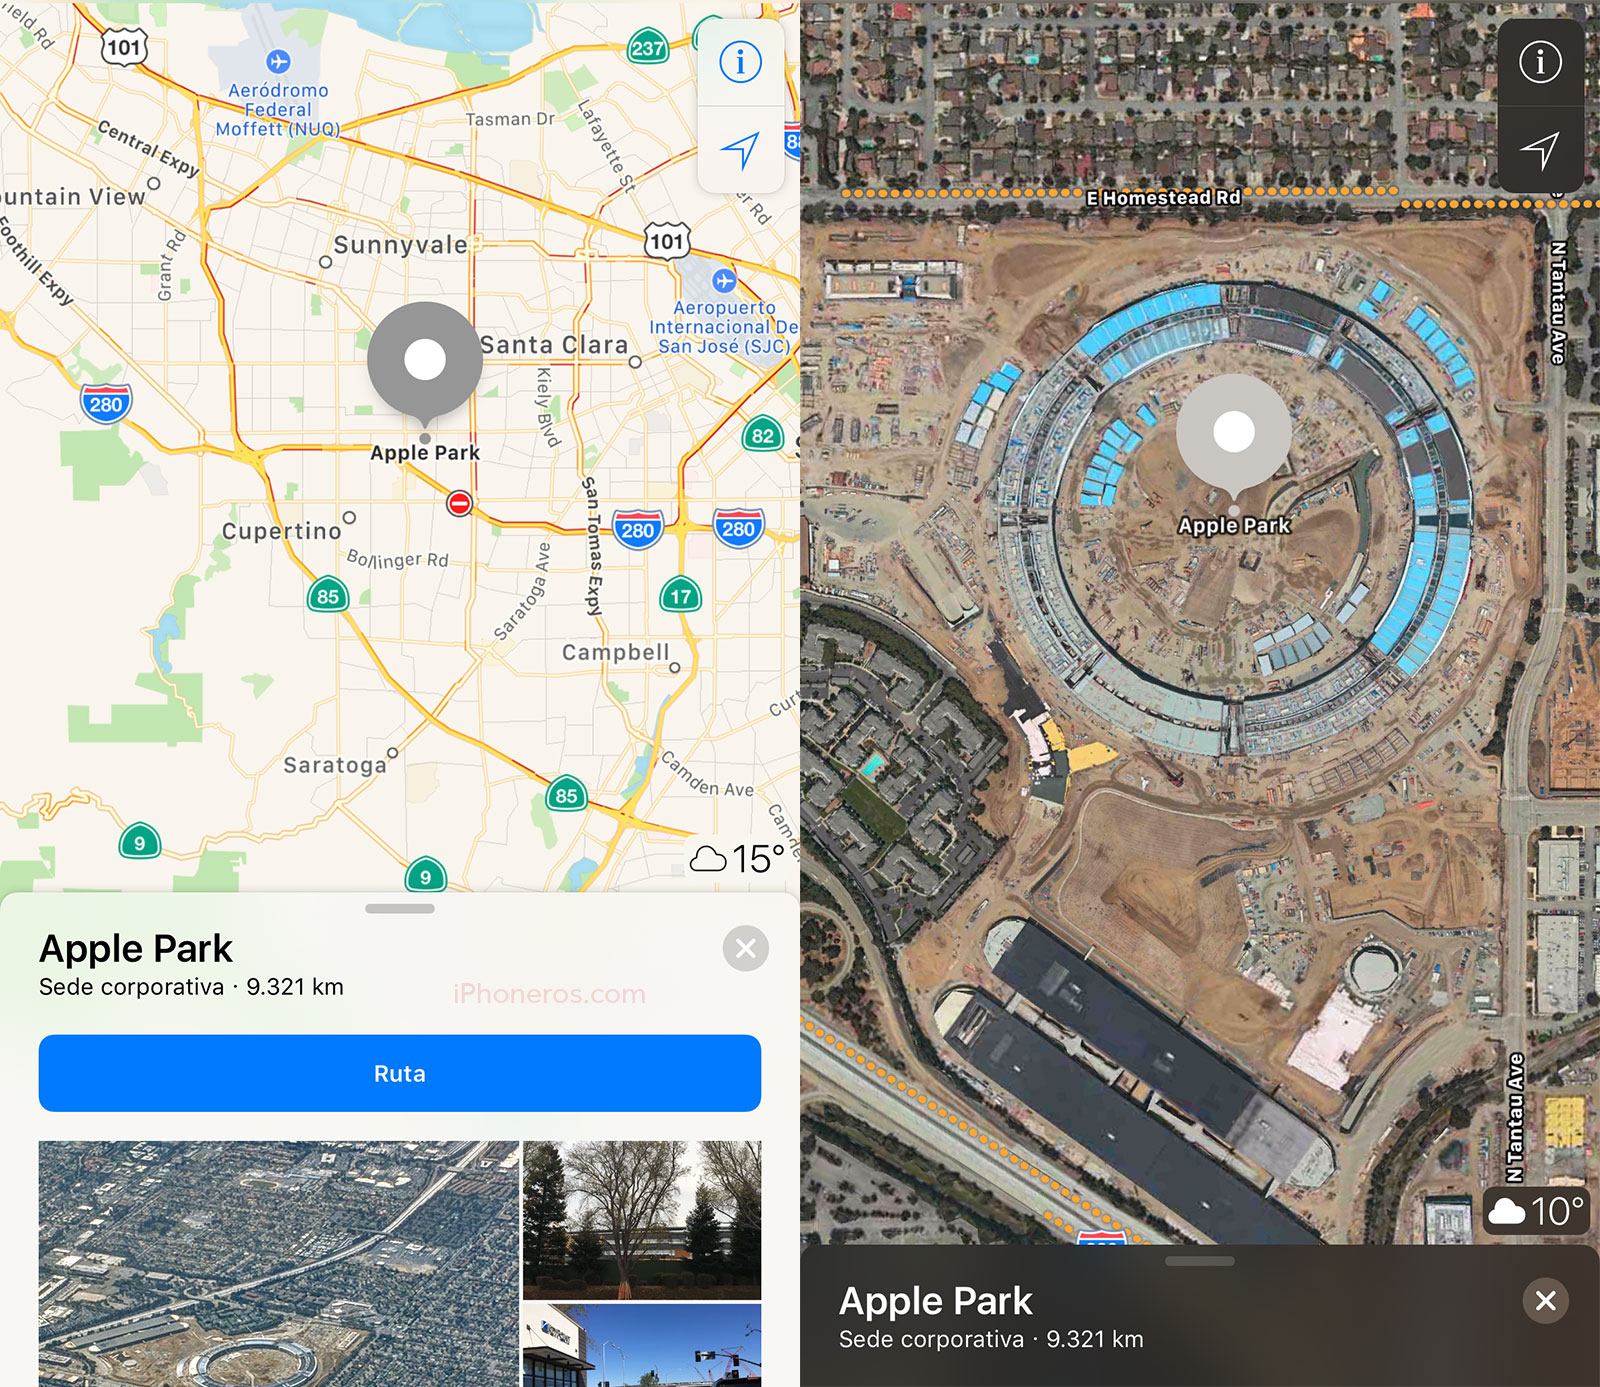 Apple Park en obras en la App de Mapas